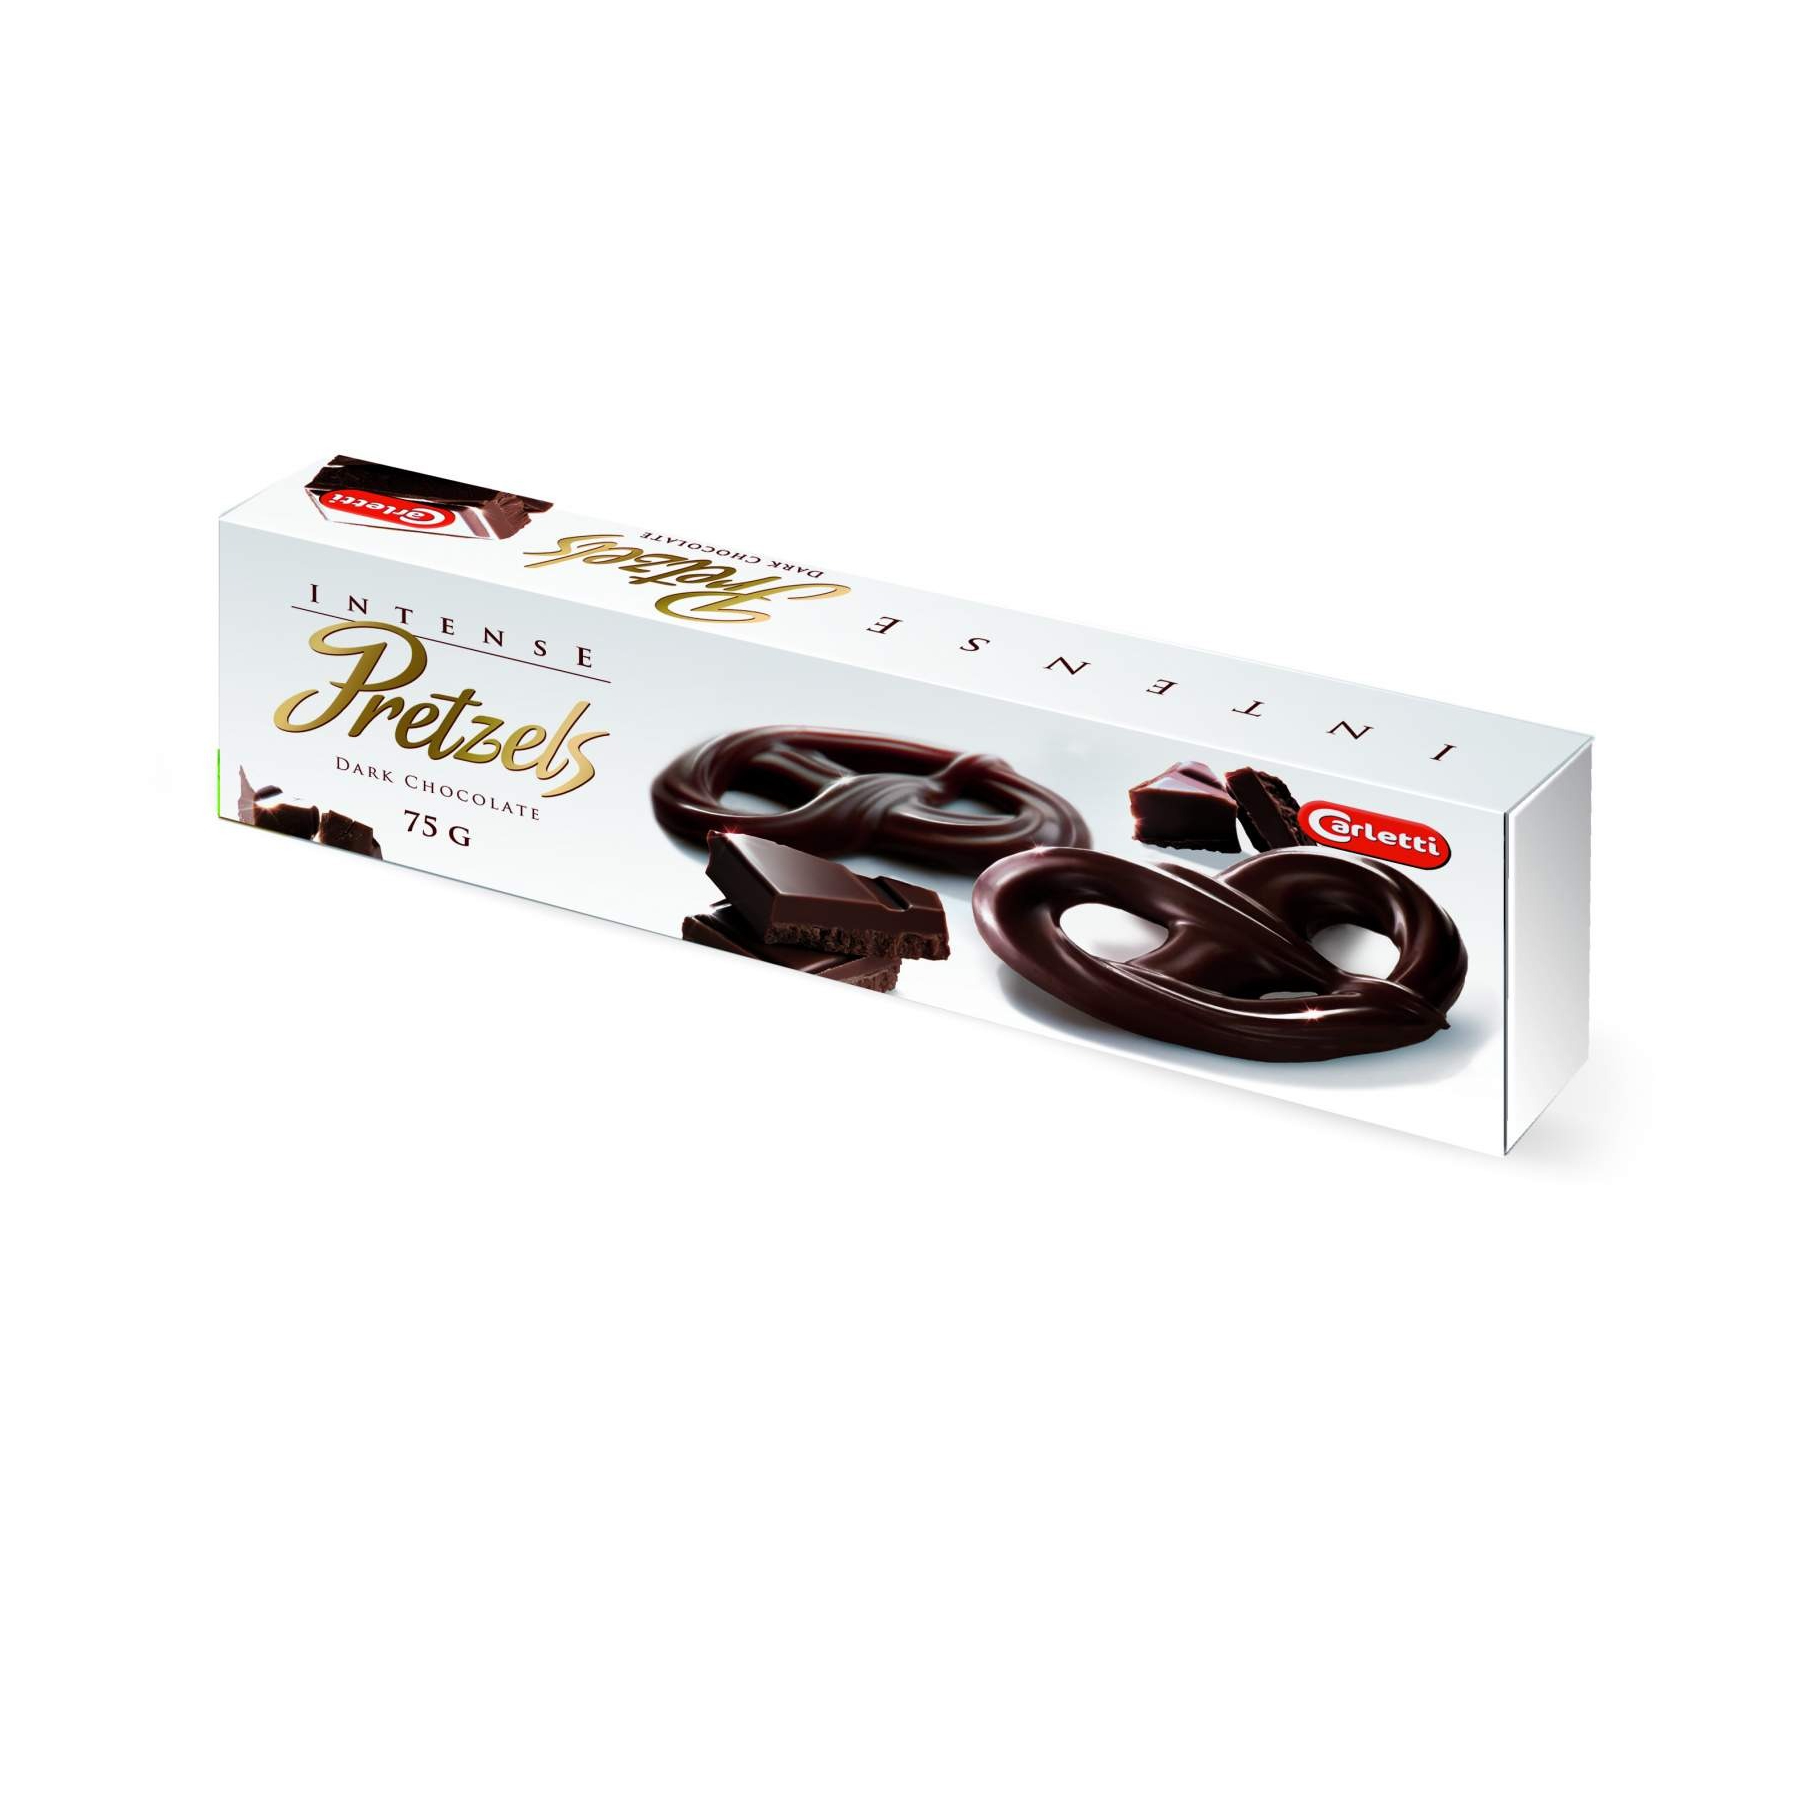 Крендельки Carletti Inrense pretzels из темного шоколада 50% 75 г